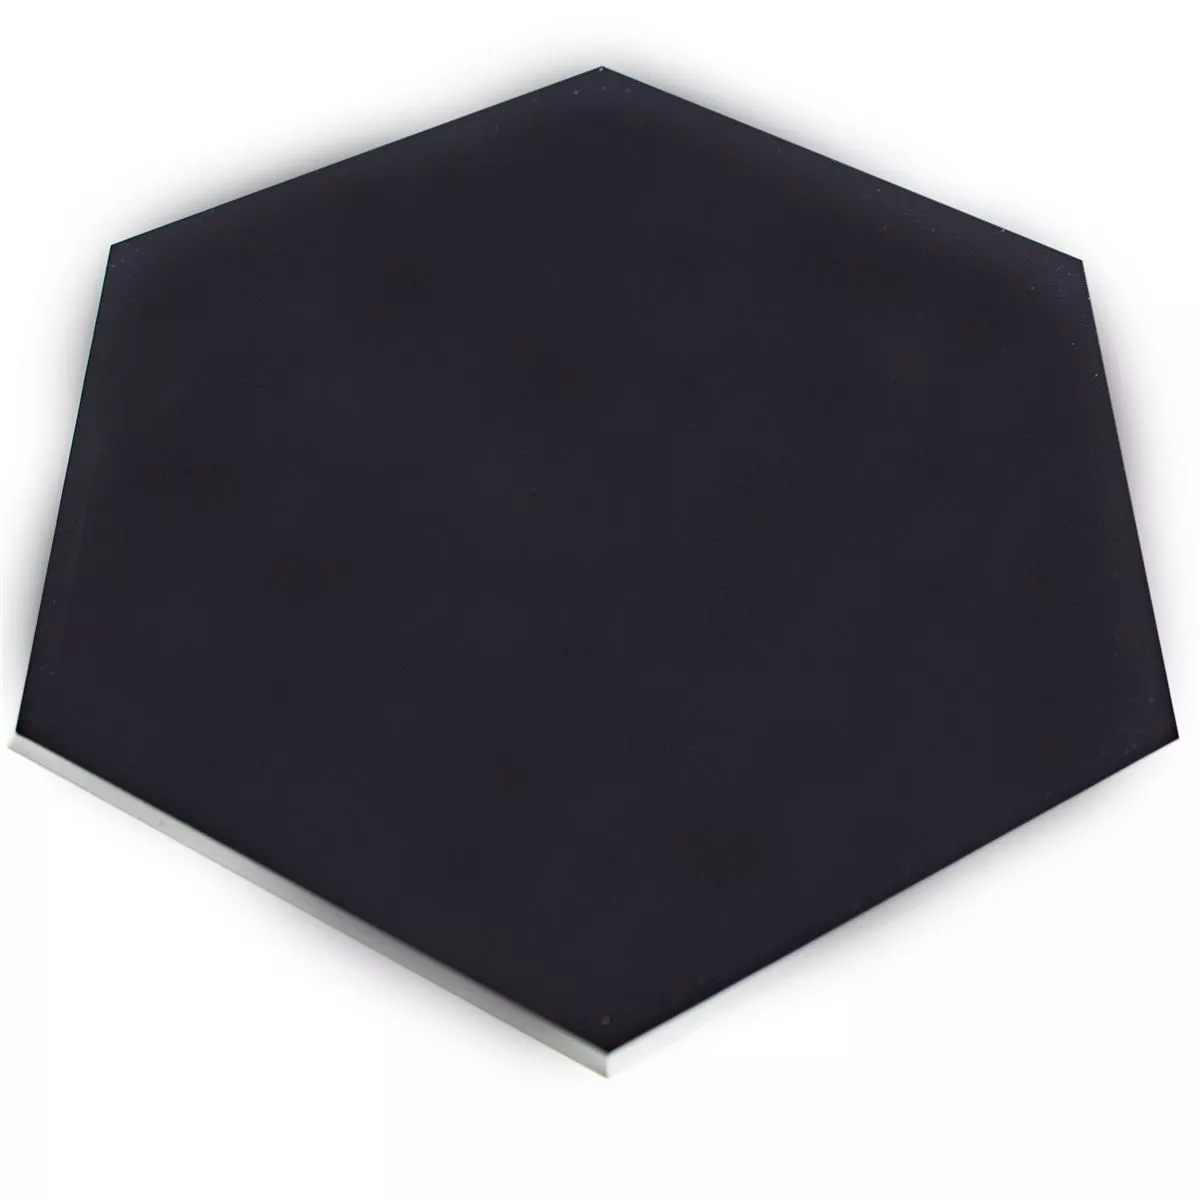 Vinyl Hexagon Wall Tile Century Self Adhesive Black